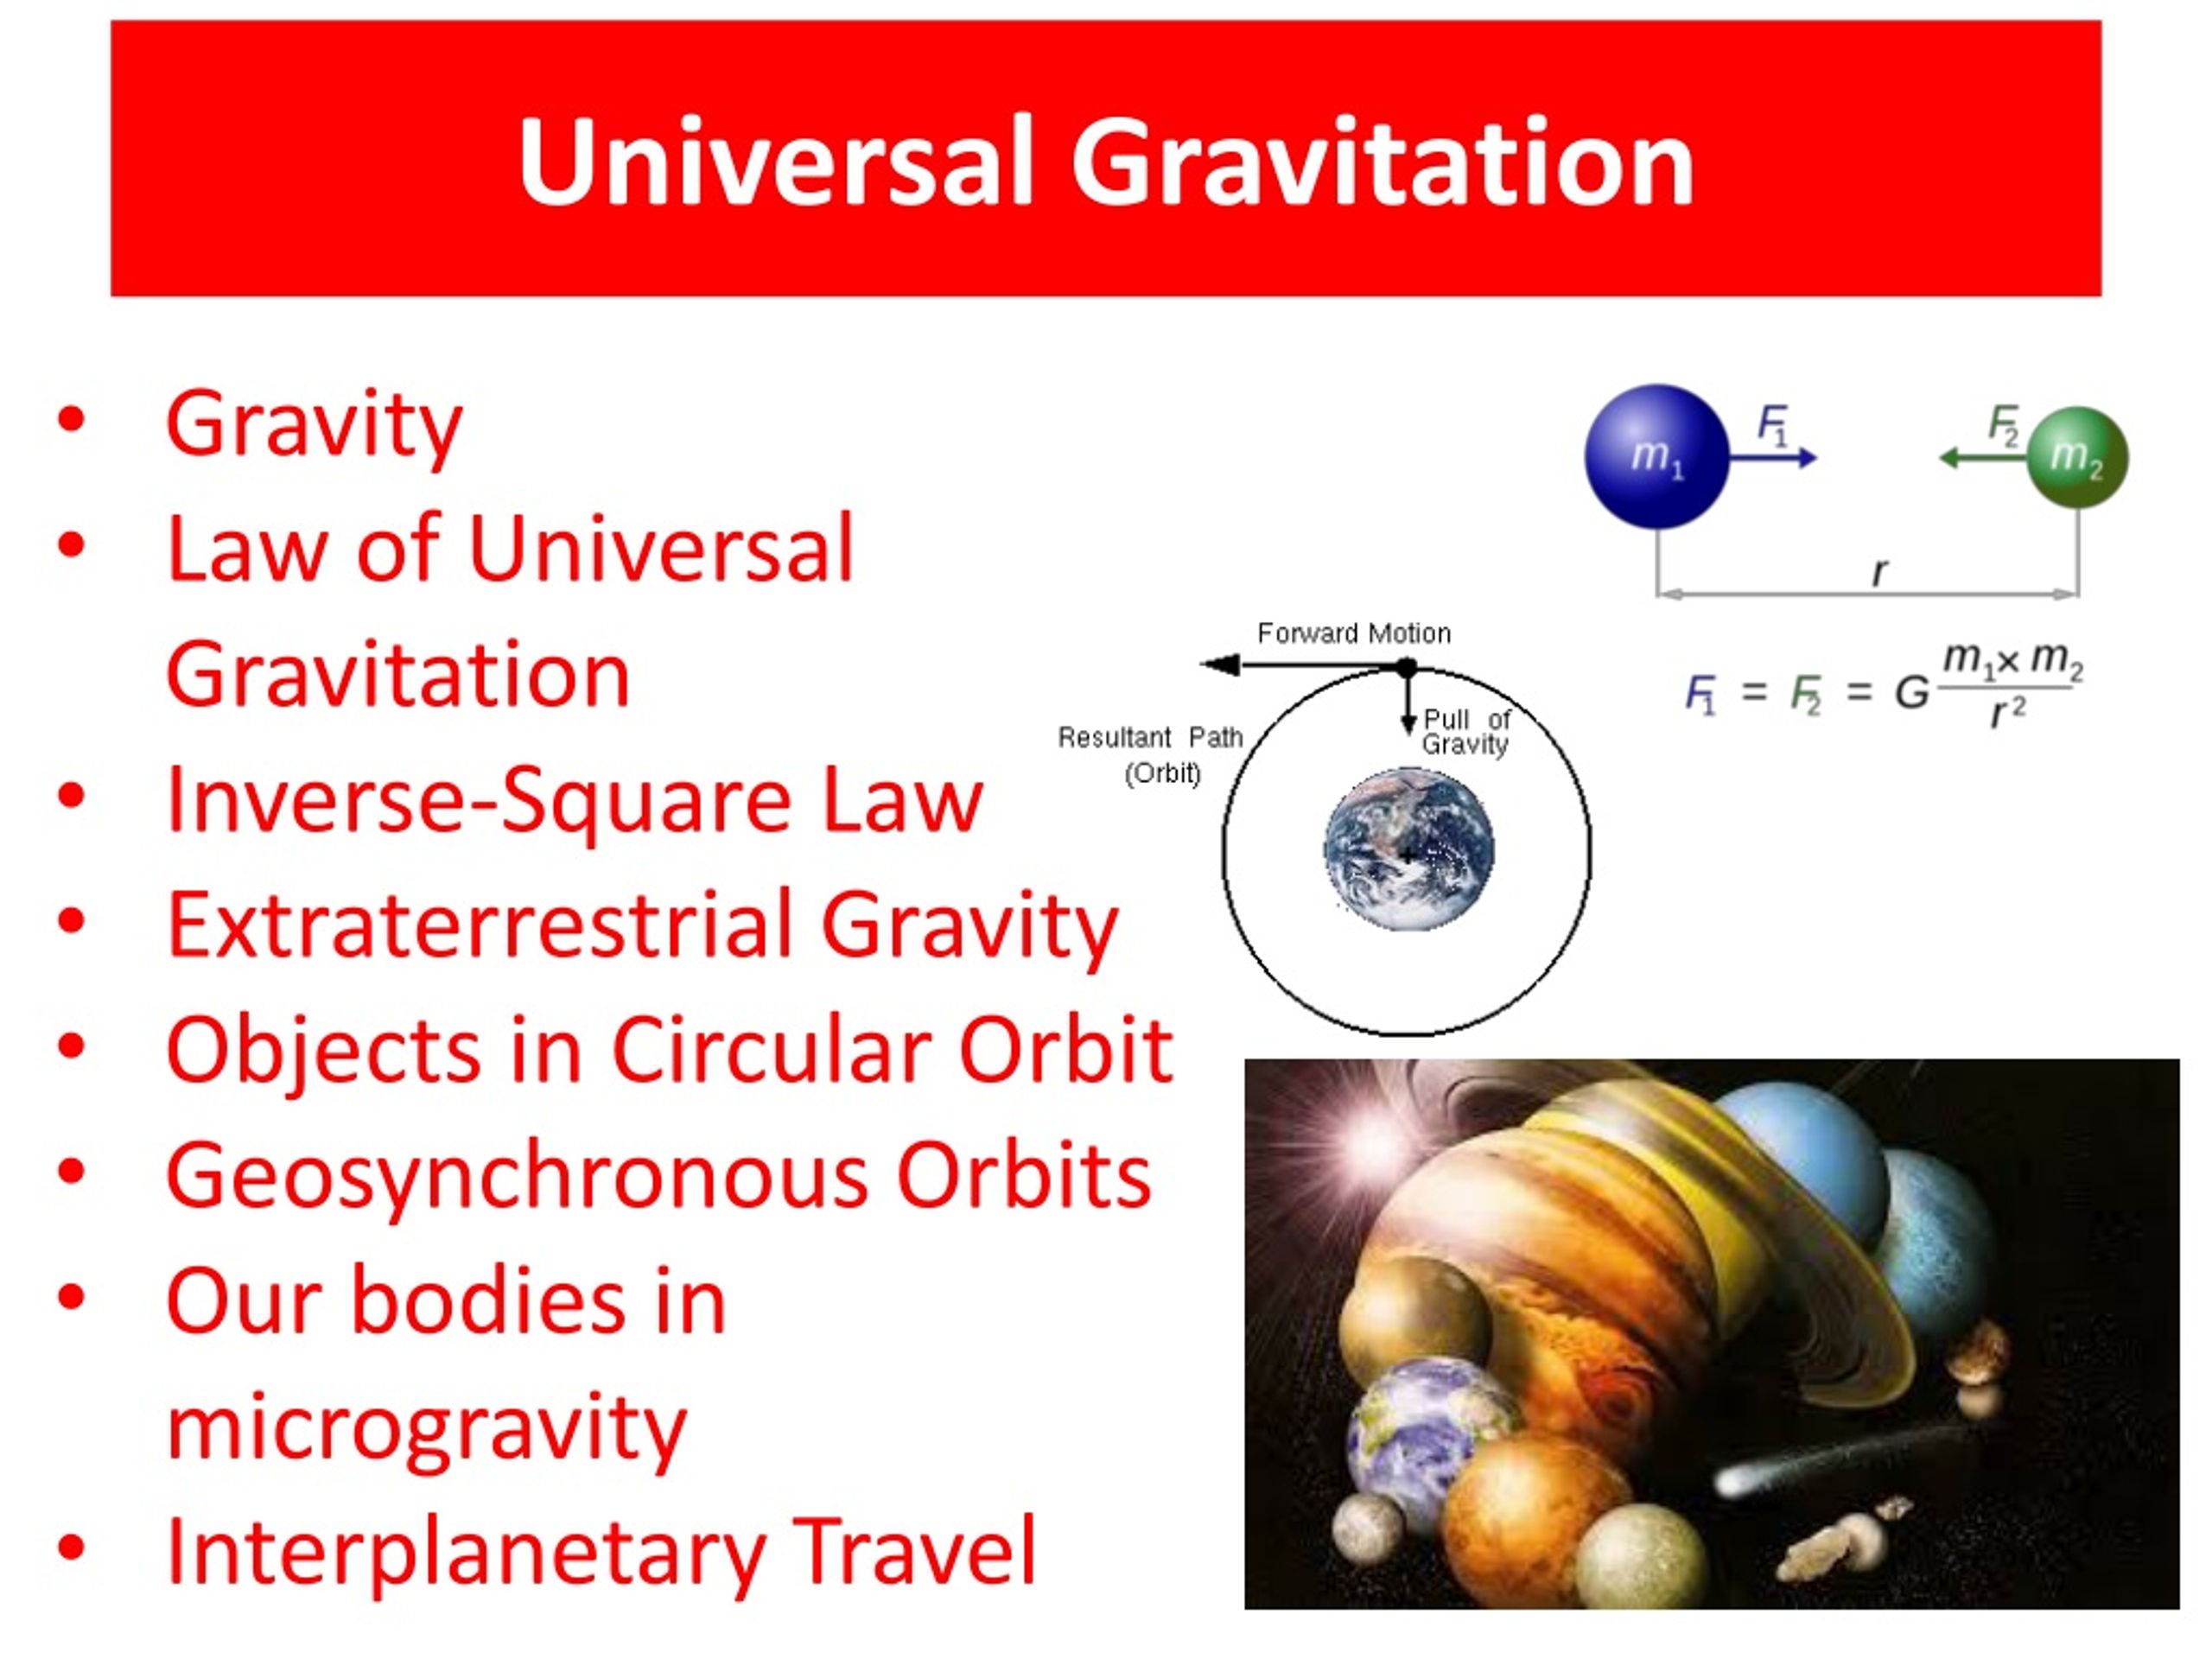 Ppt Universal Gravitation Powerpoint Presentation Free Download Id657284 9436